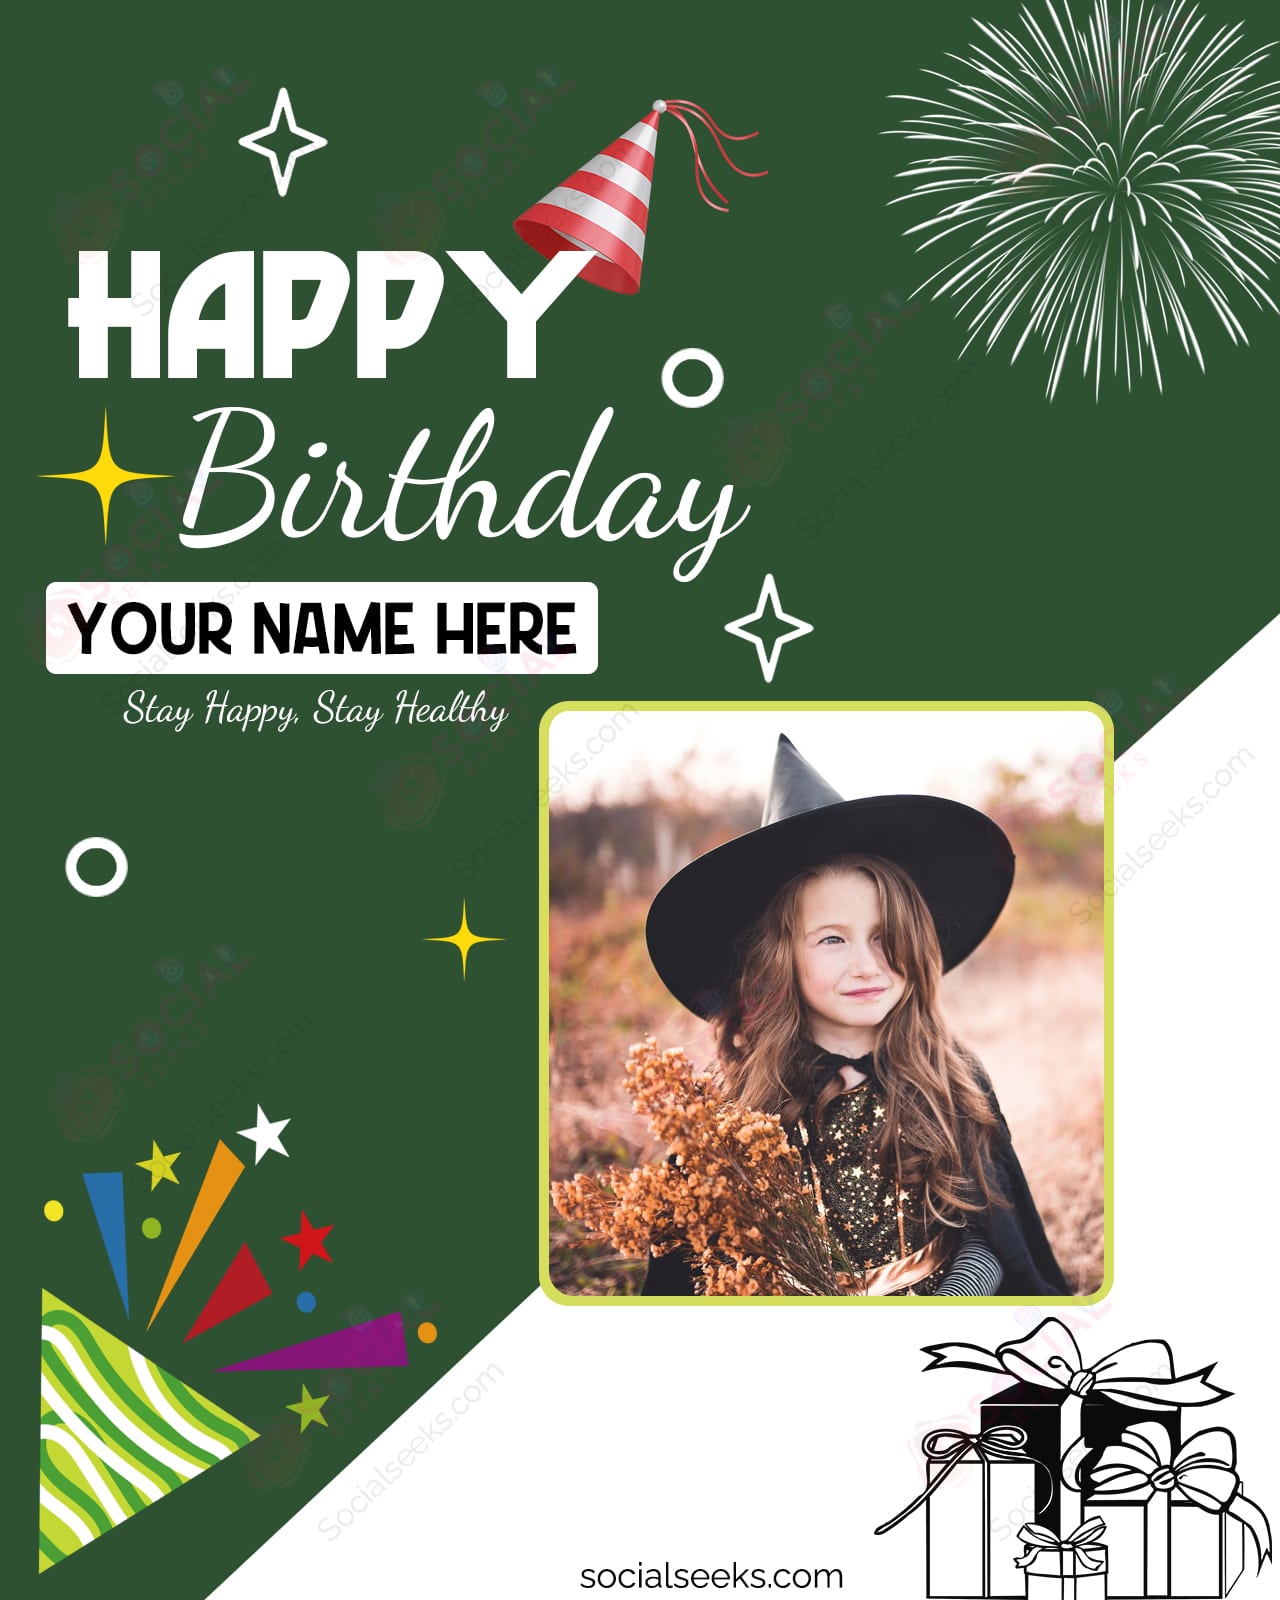 Customized Happy Birthday Frame Images